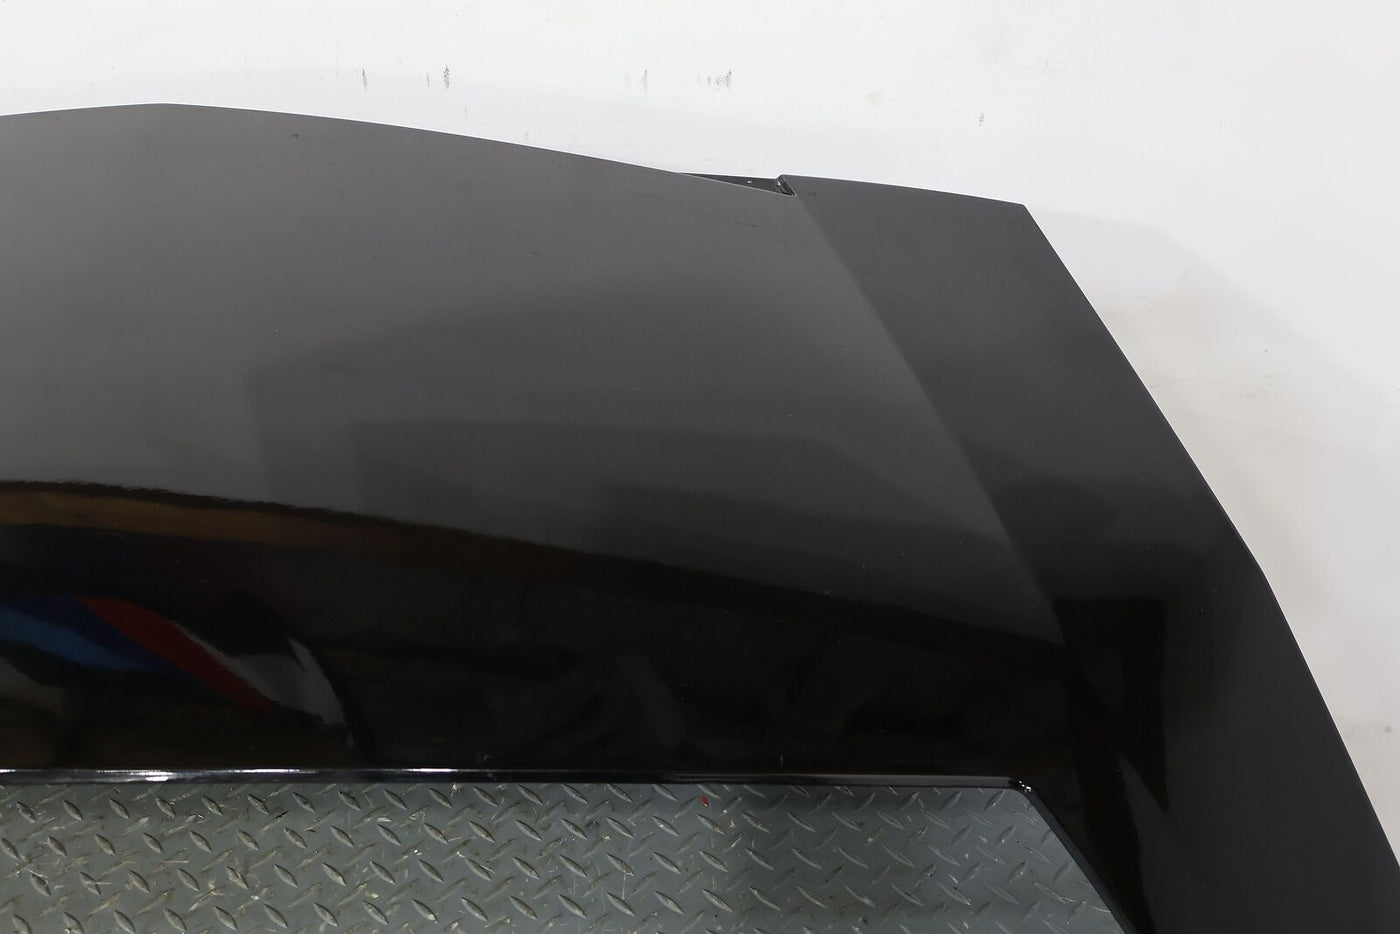 04-09 Cadillac XLR Bare Rear Deck / Trunk Lid (Black Respray) Sold Bare